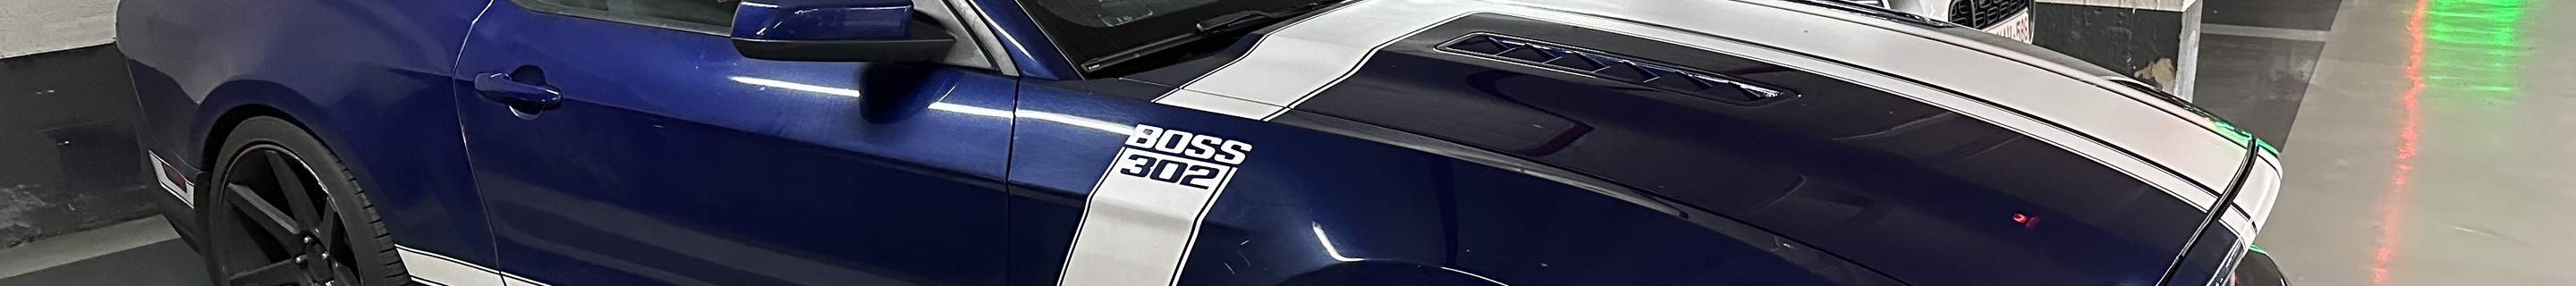 Ford Mustang Boss 302 Laguna Seca 2013